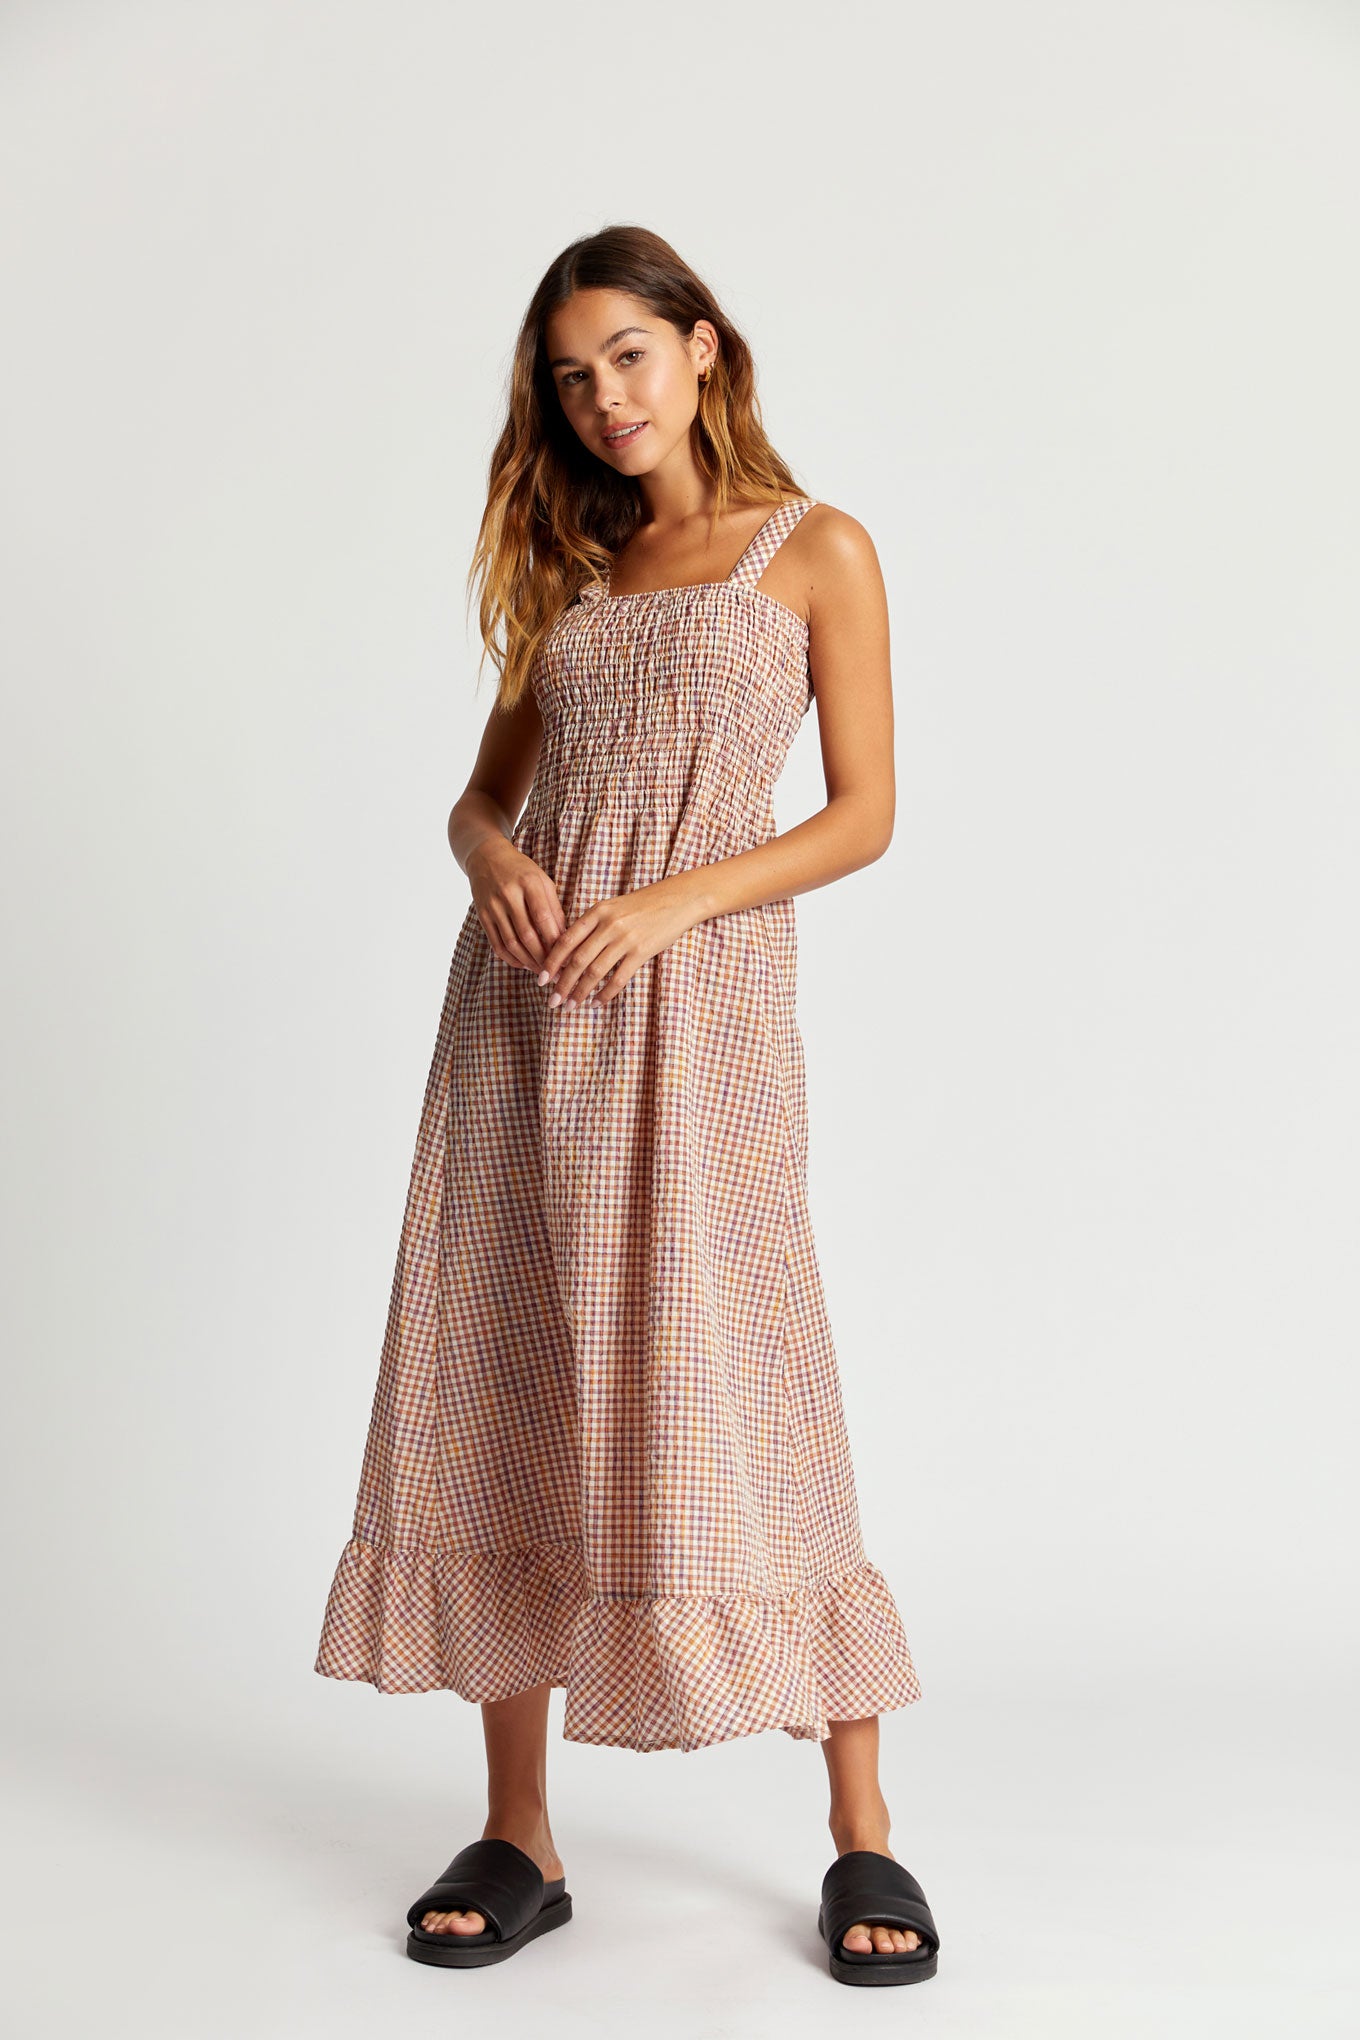 HOYA Organic Cotton Dress - Rainbow Check, SIZE 1 / UK 8 / EUR 36